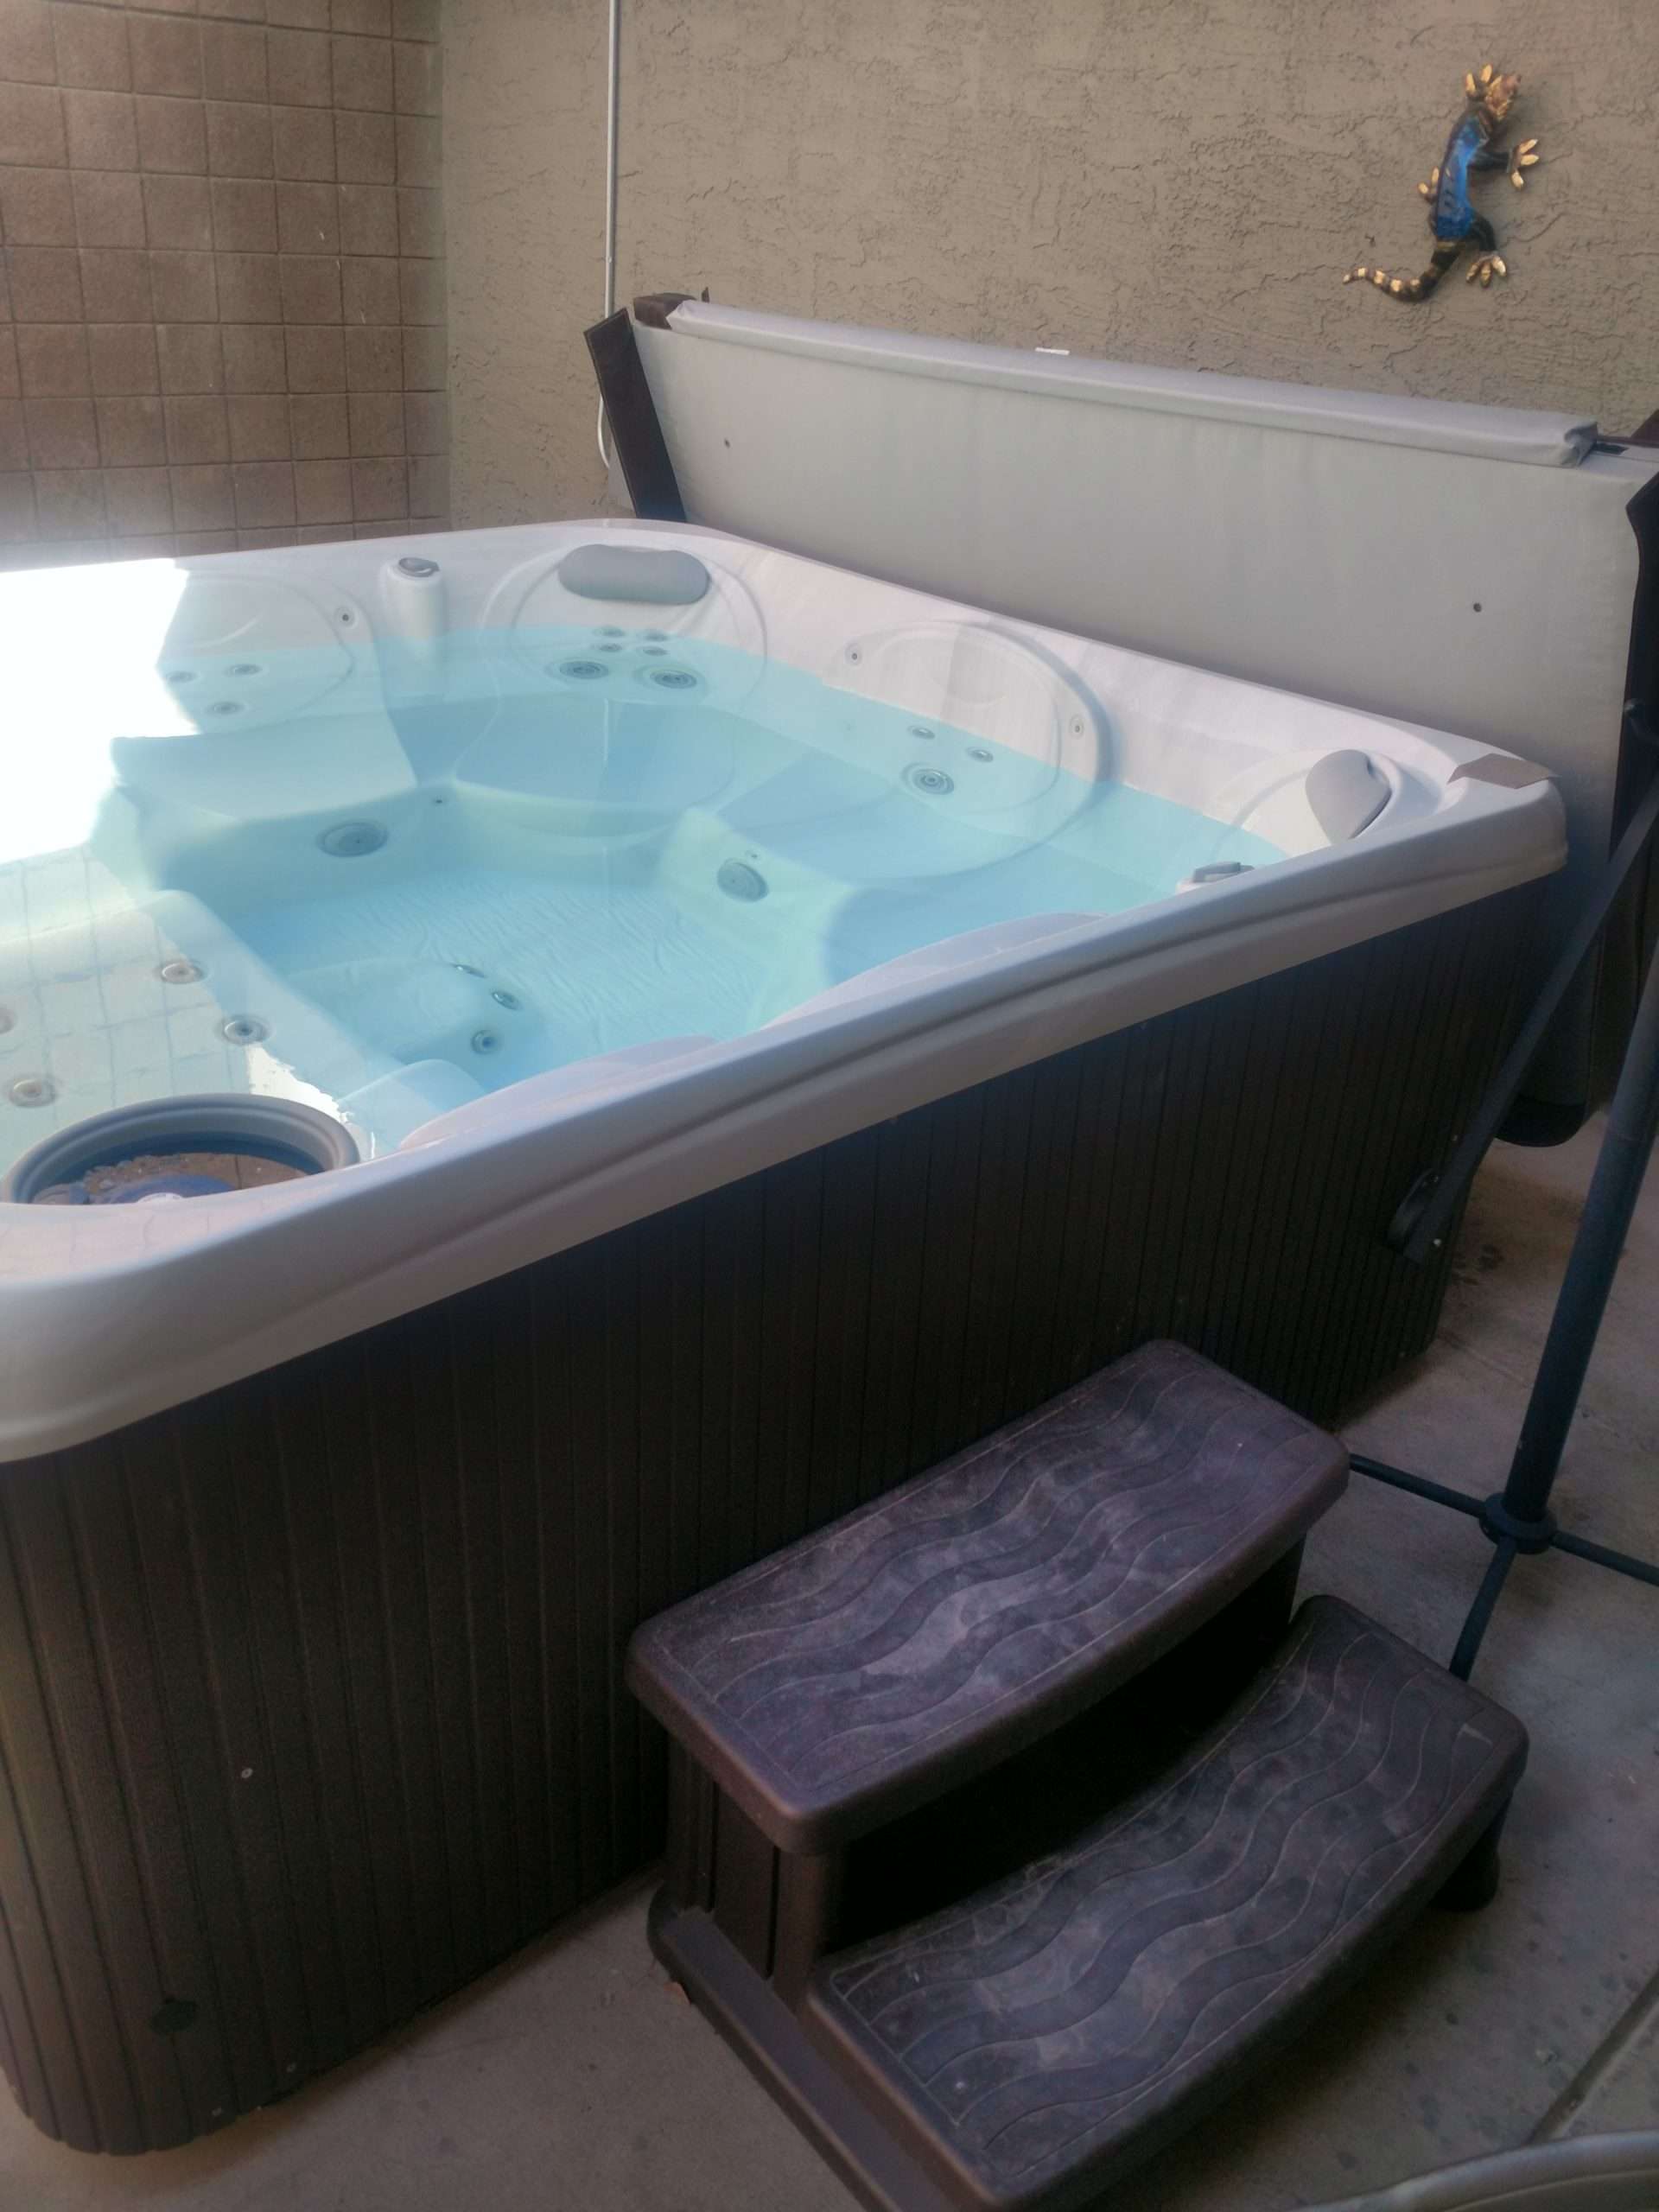 Hot Springs like new tub